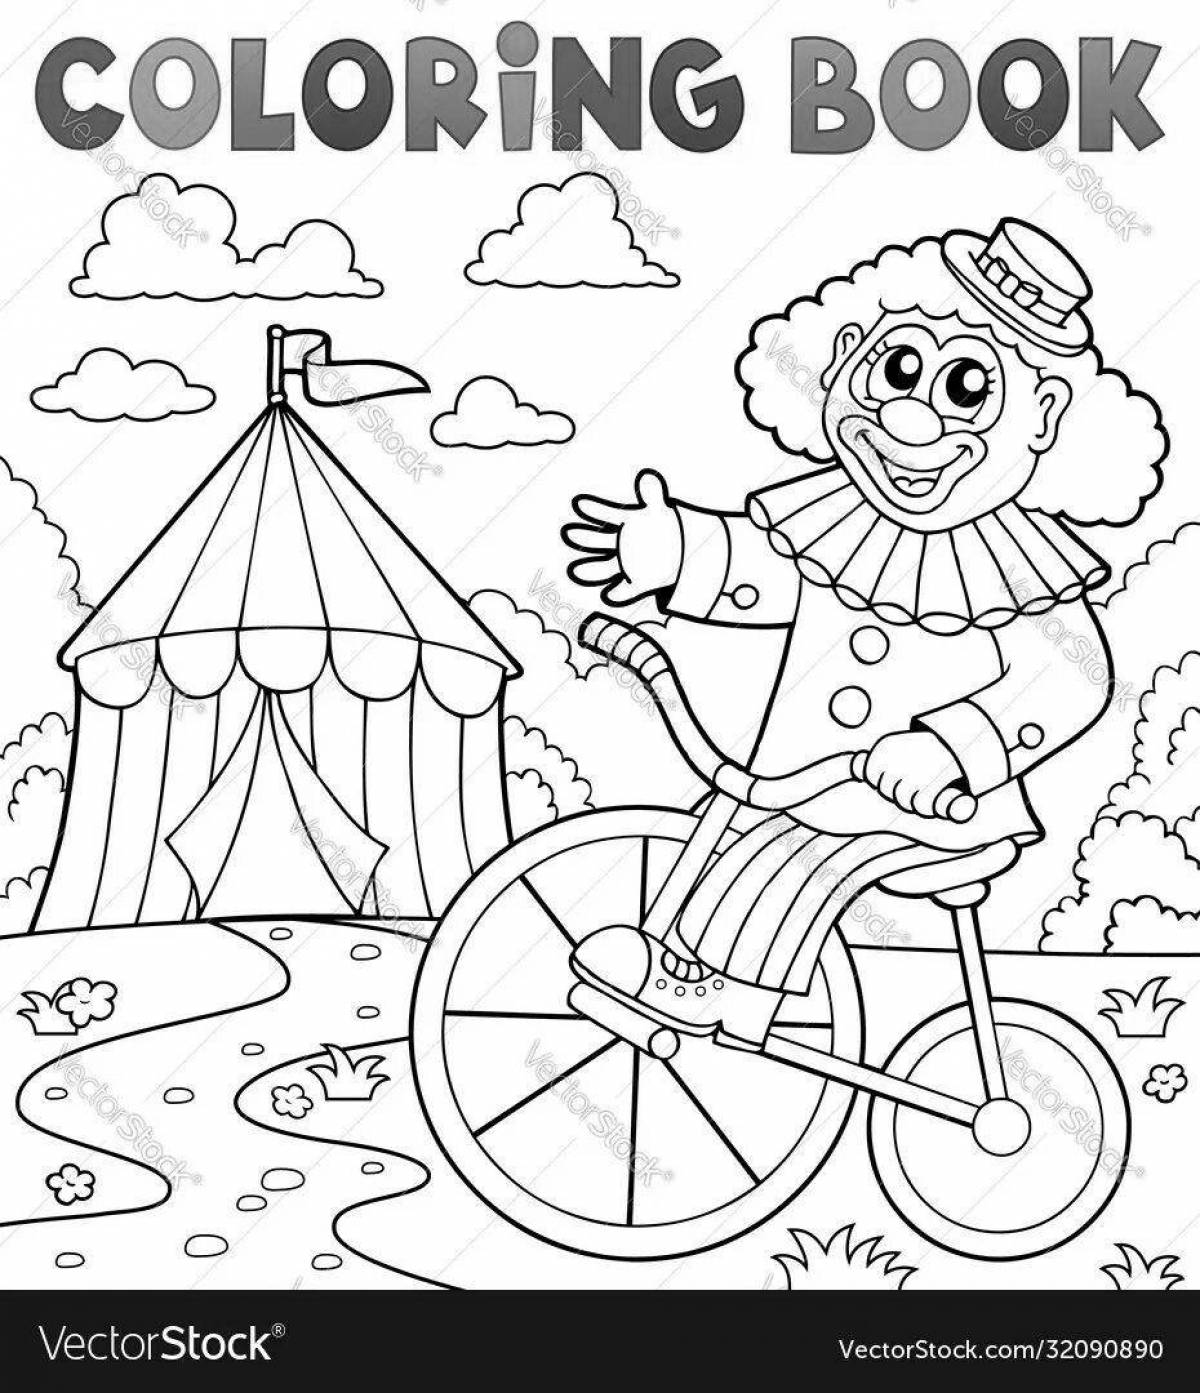 A fun circus coloring book for preschoolers